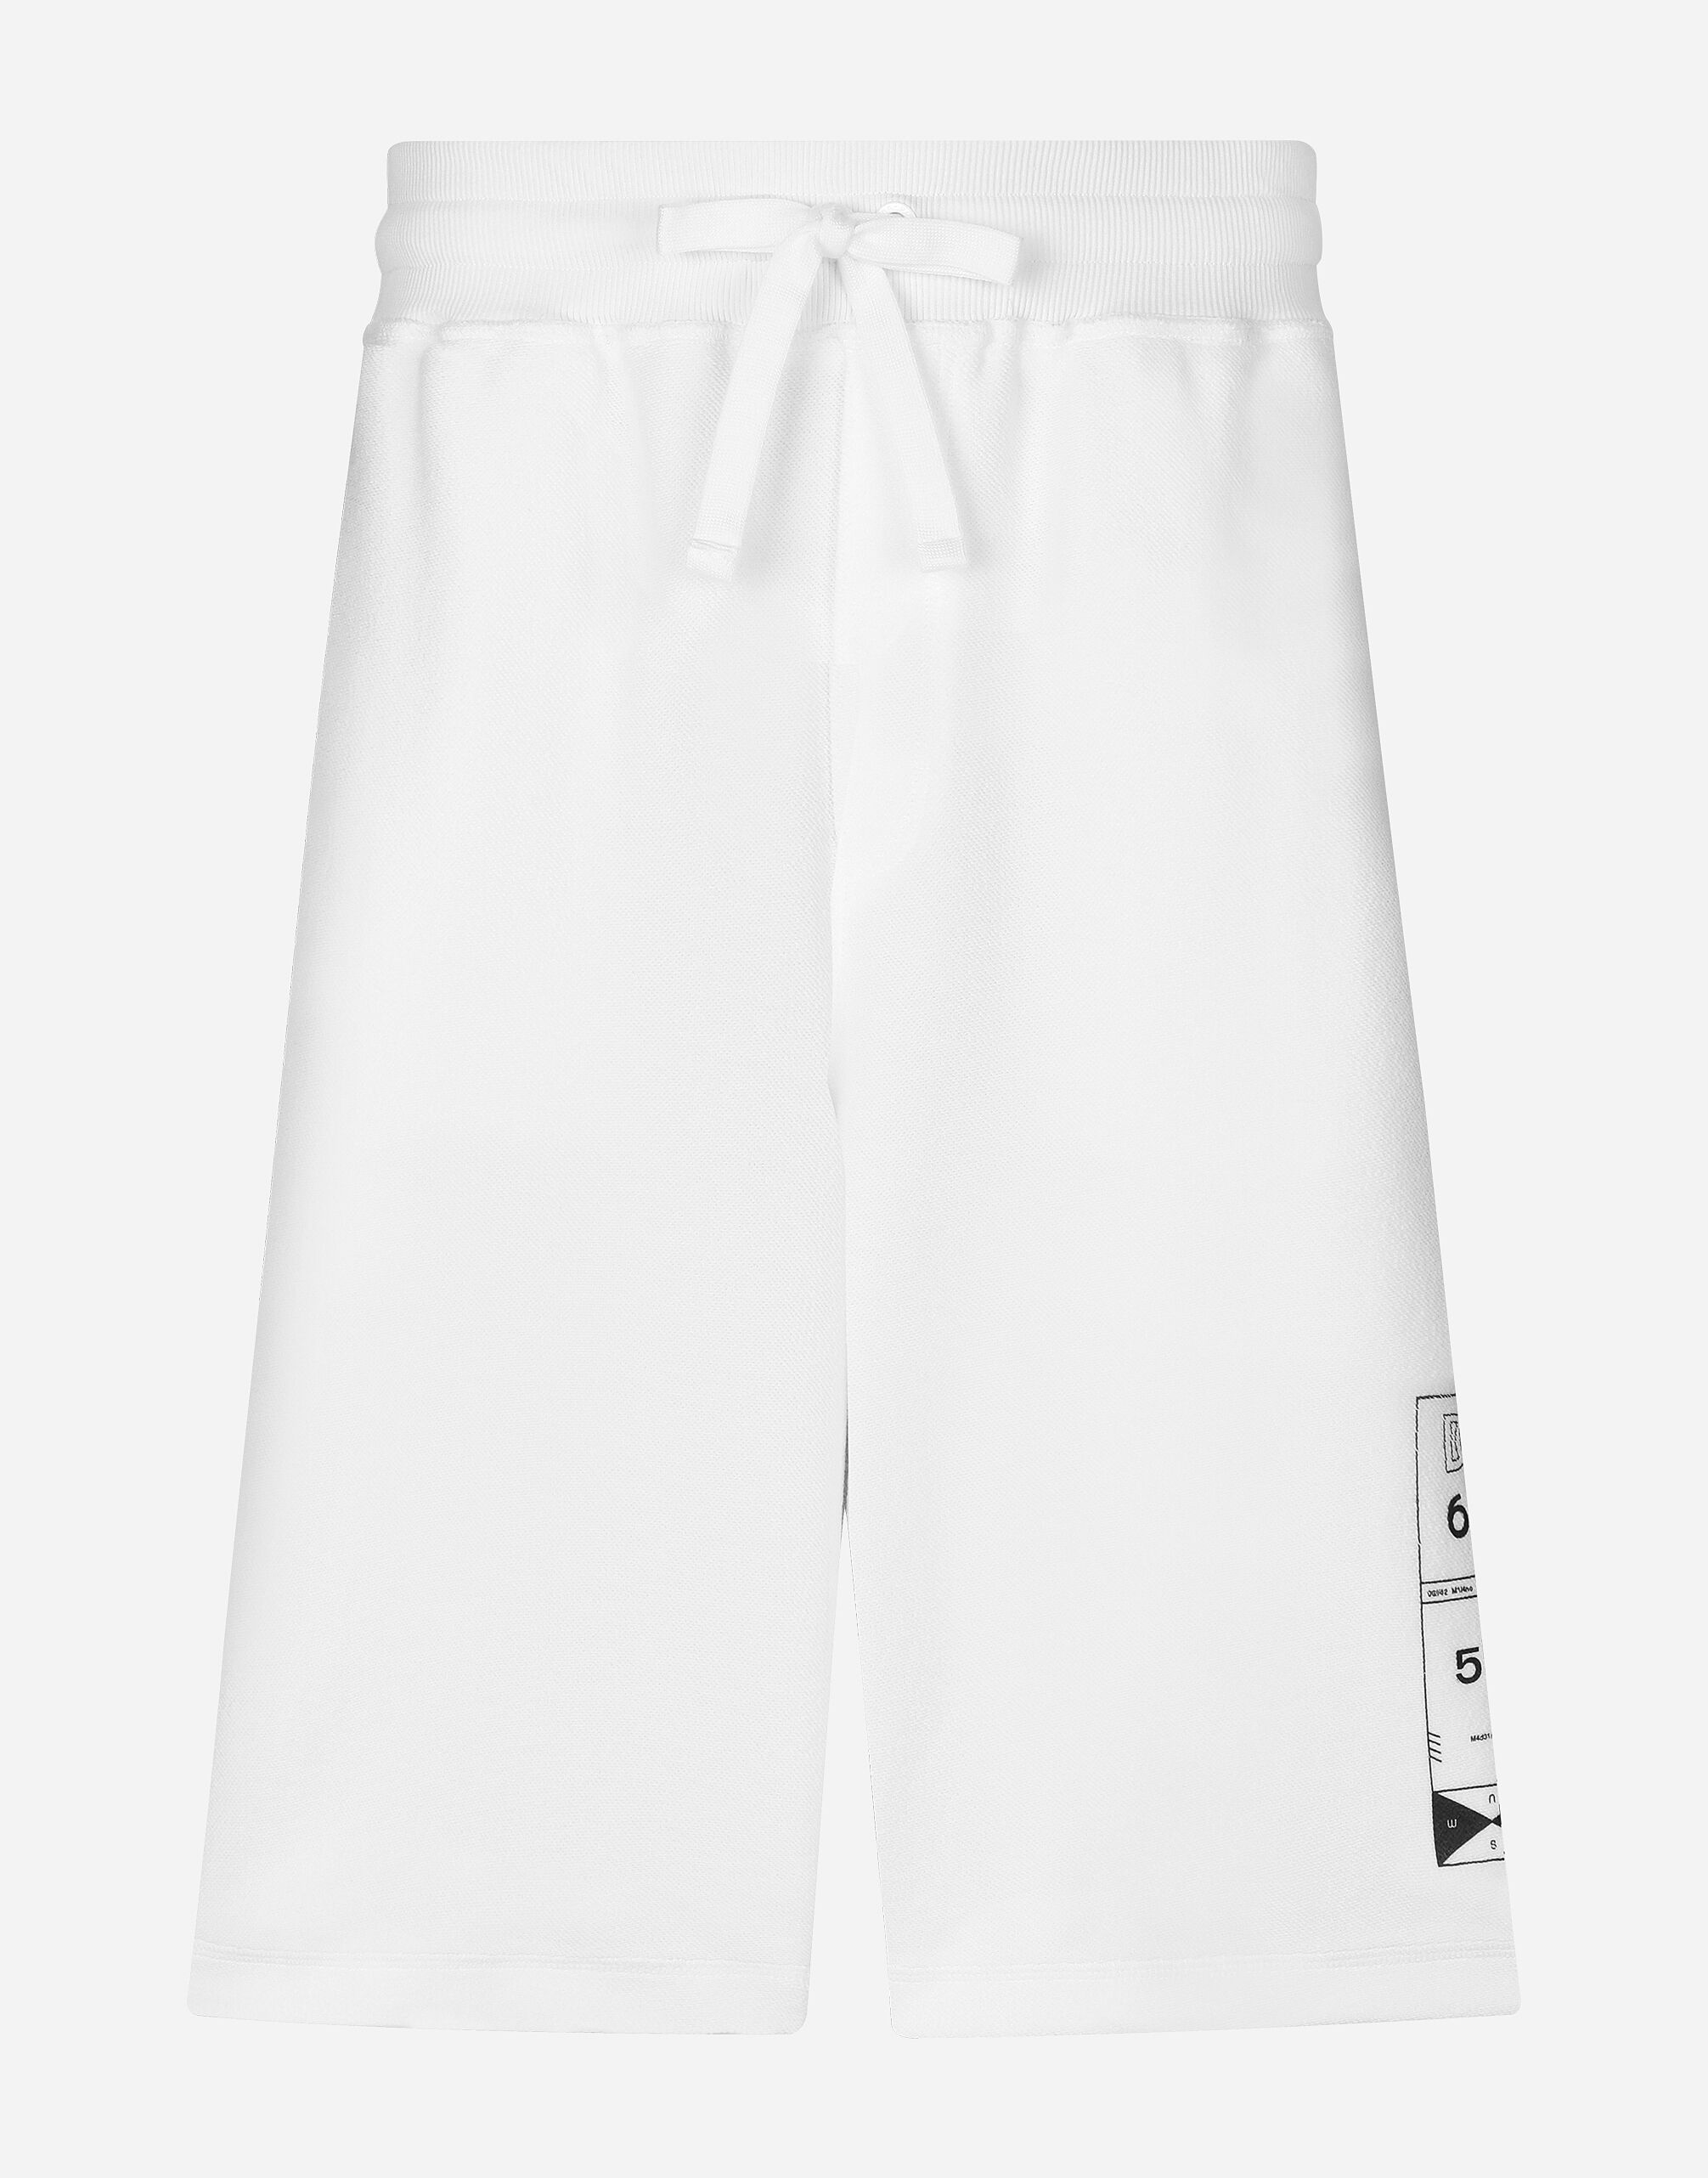 Dolce & Gabbana Jogging shorts White GP02ETFUFL5